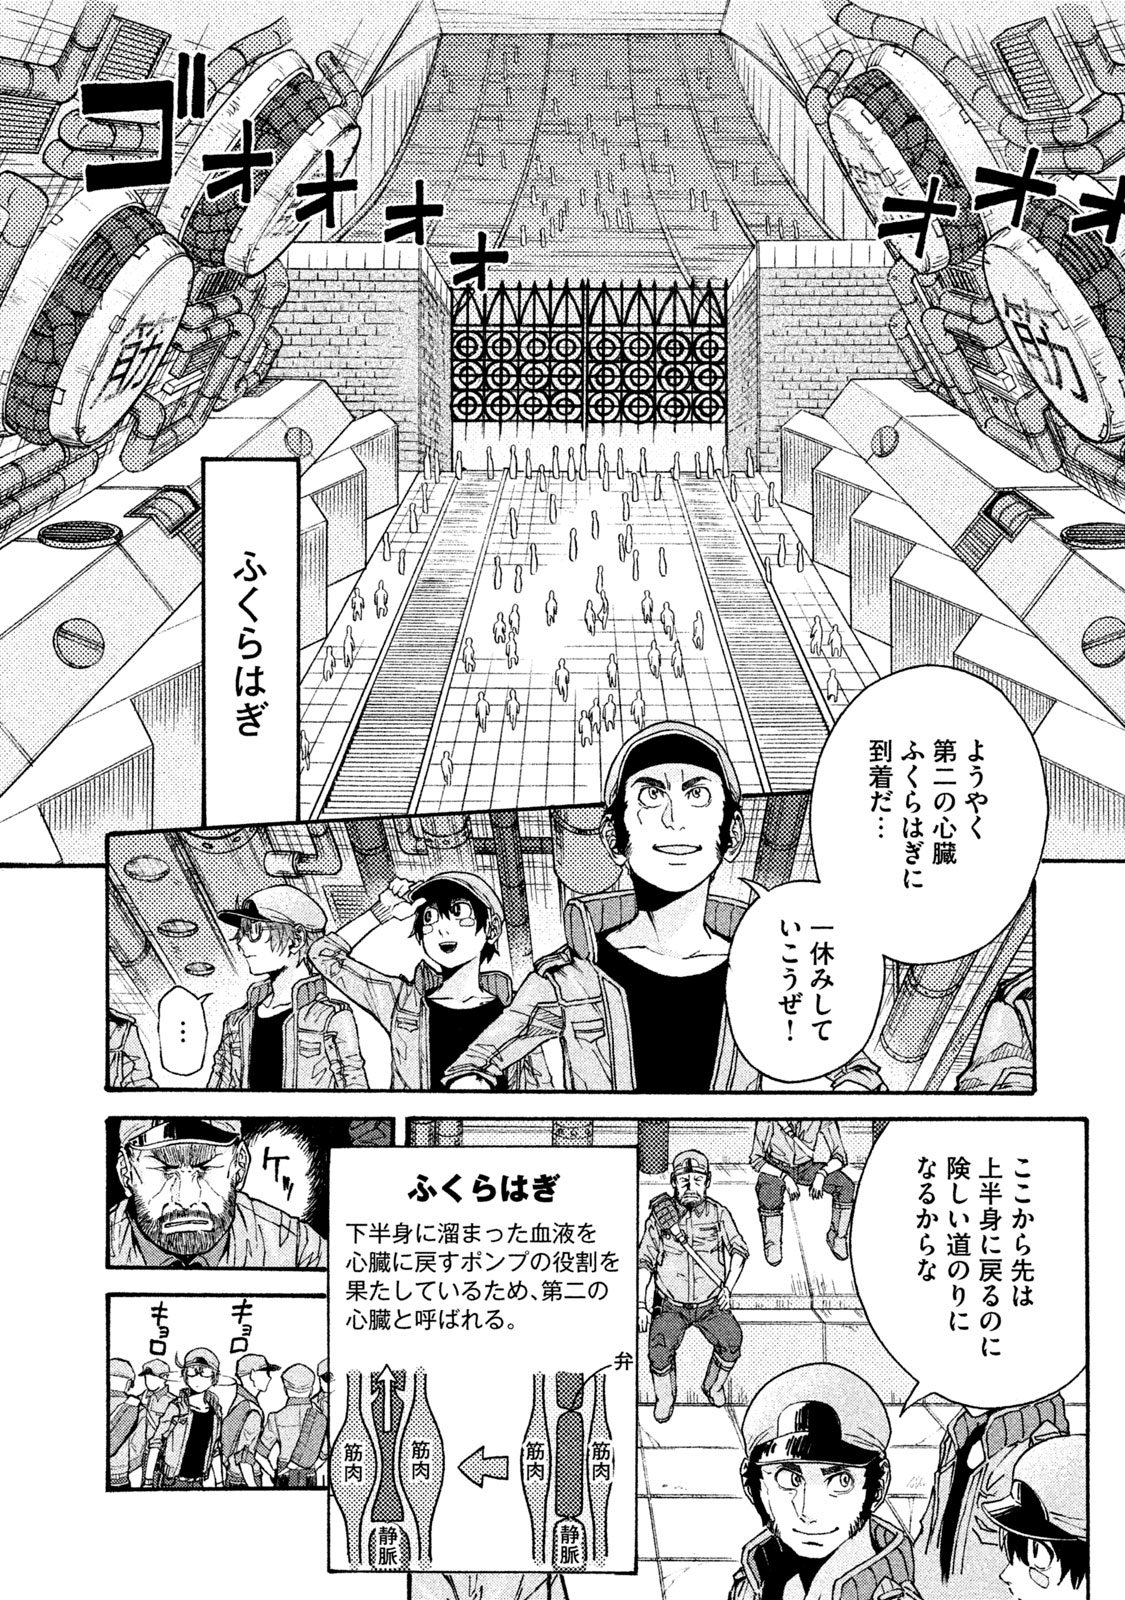 Hataraku Saibou BLACK - Chapter 16 - Page 2